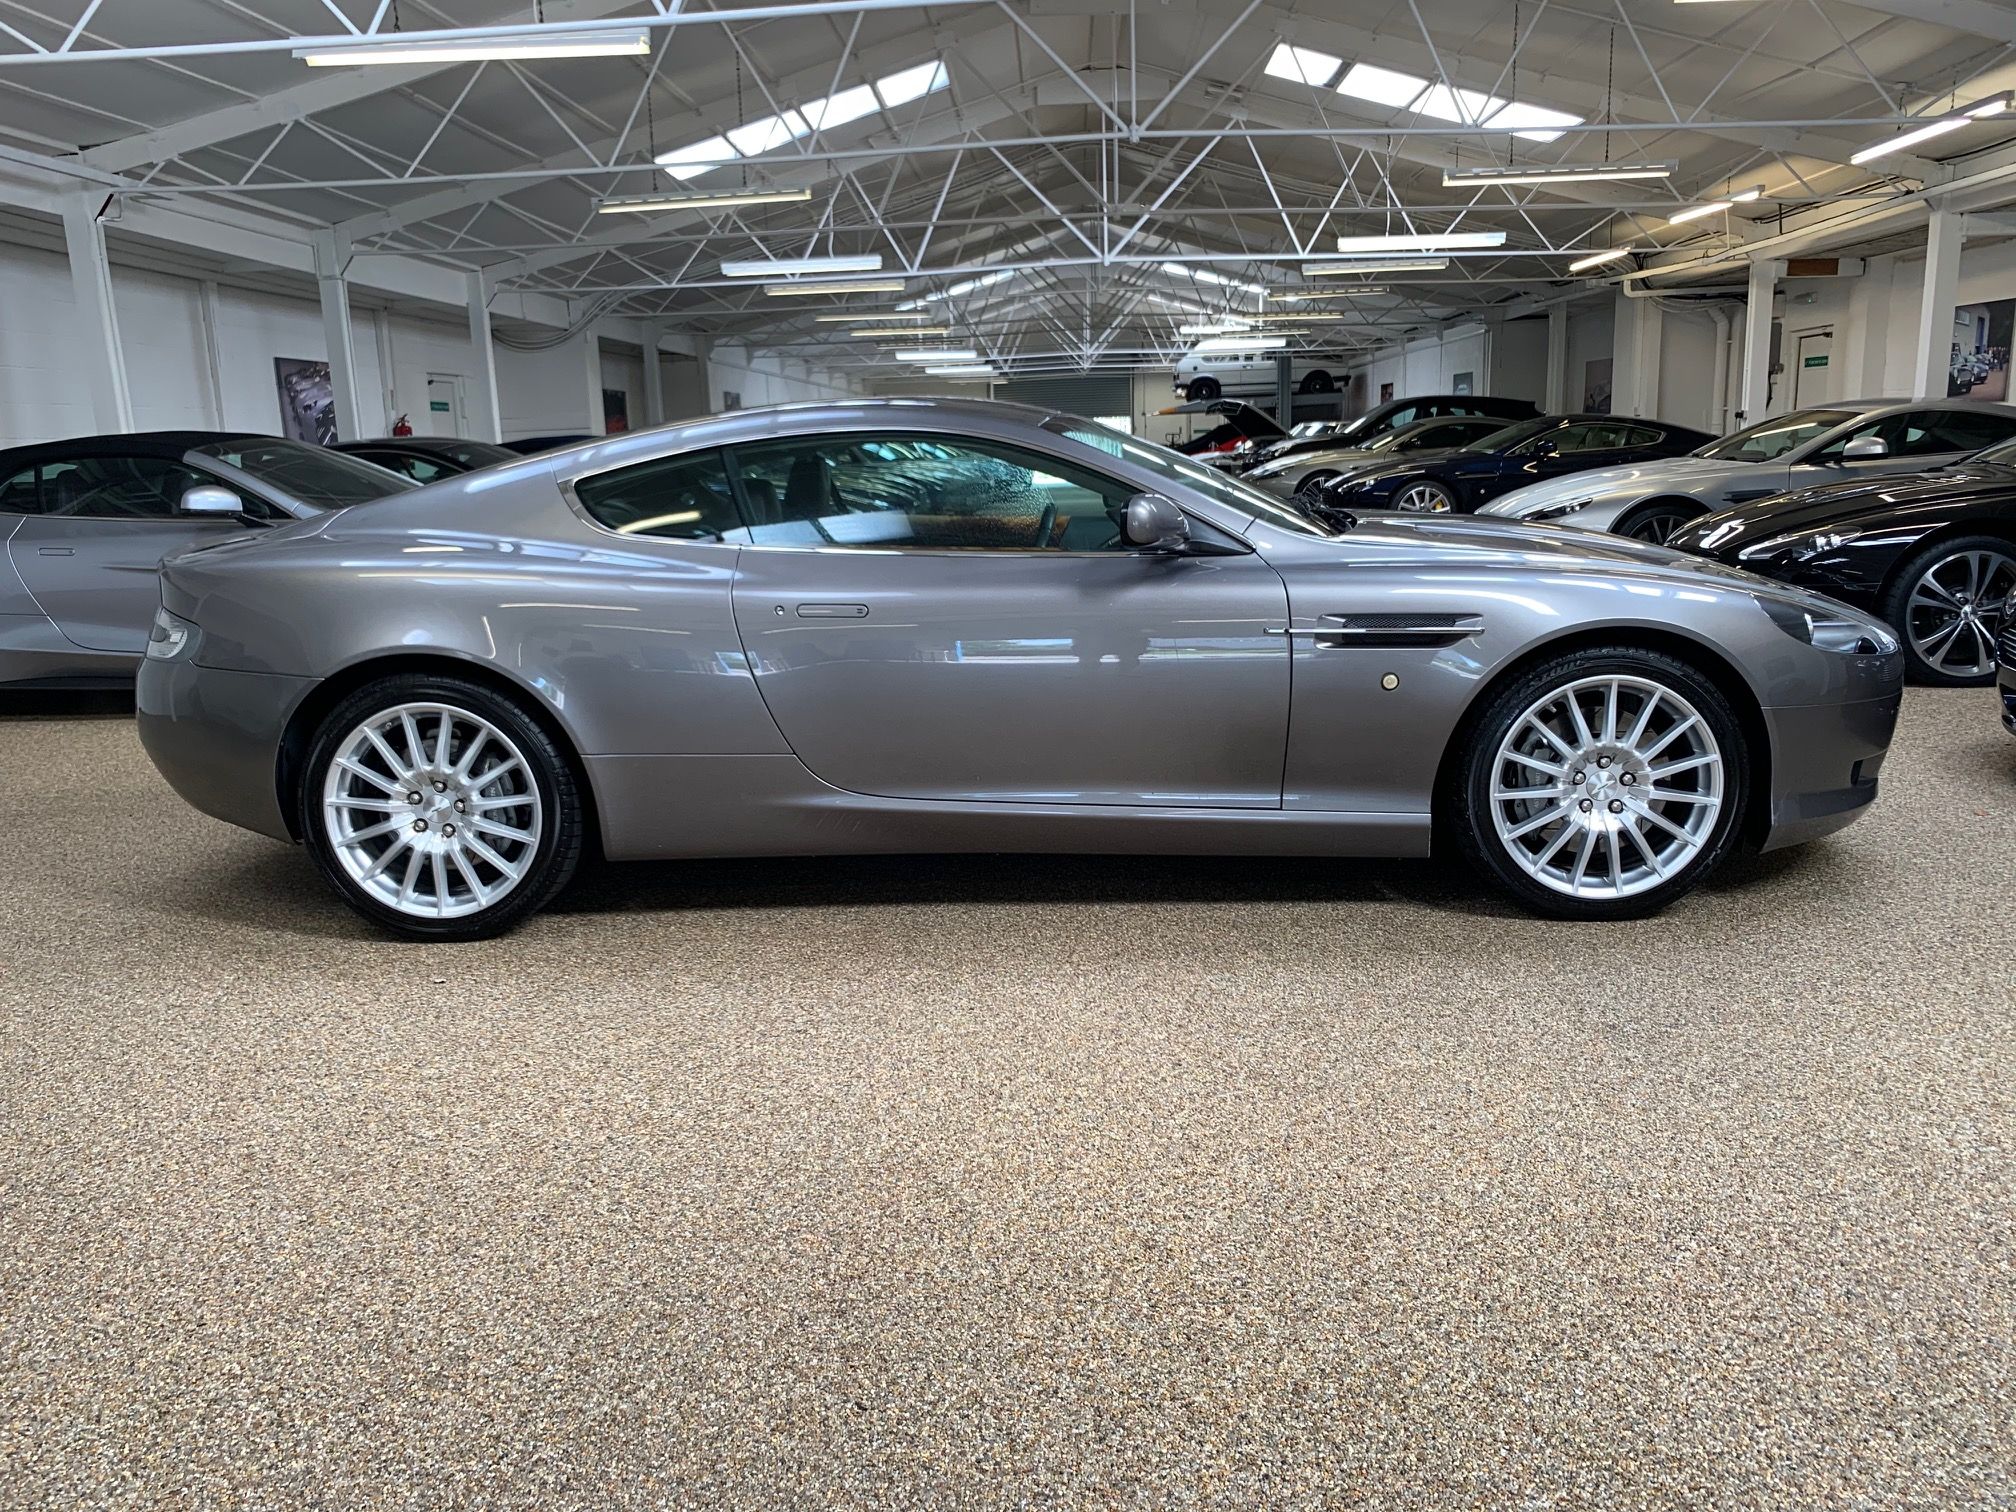 Aston Martin DB9 for sale